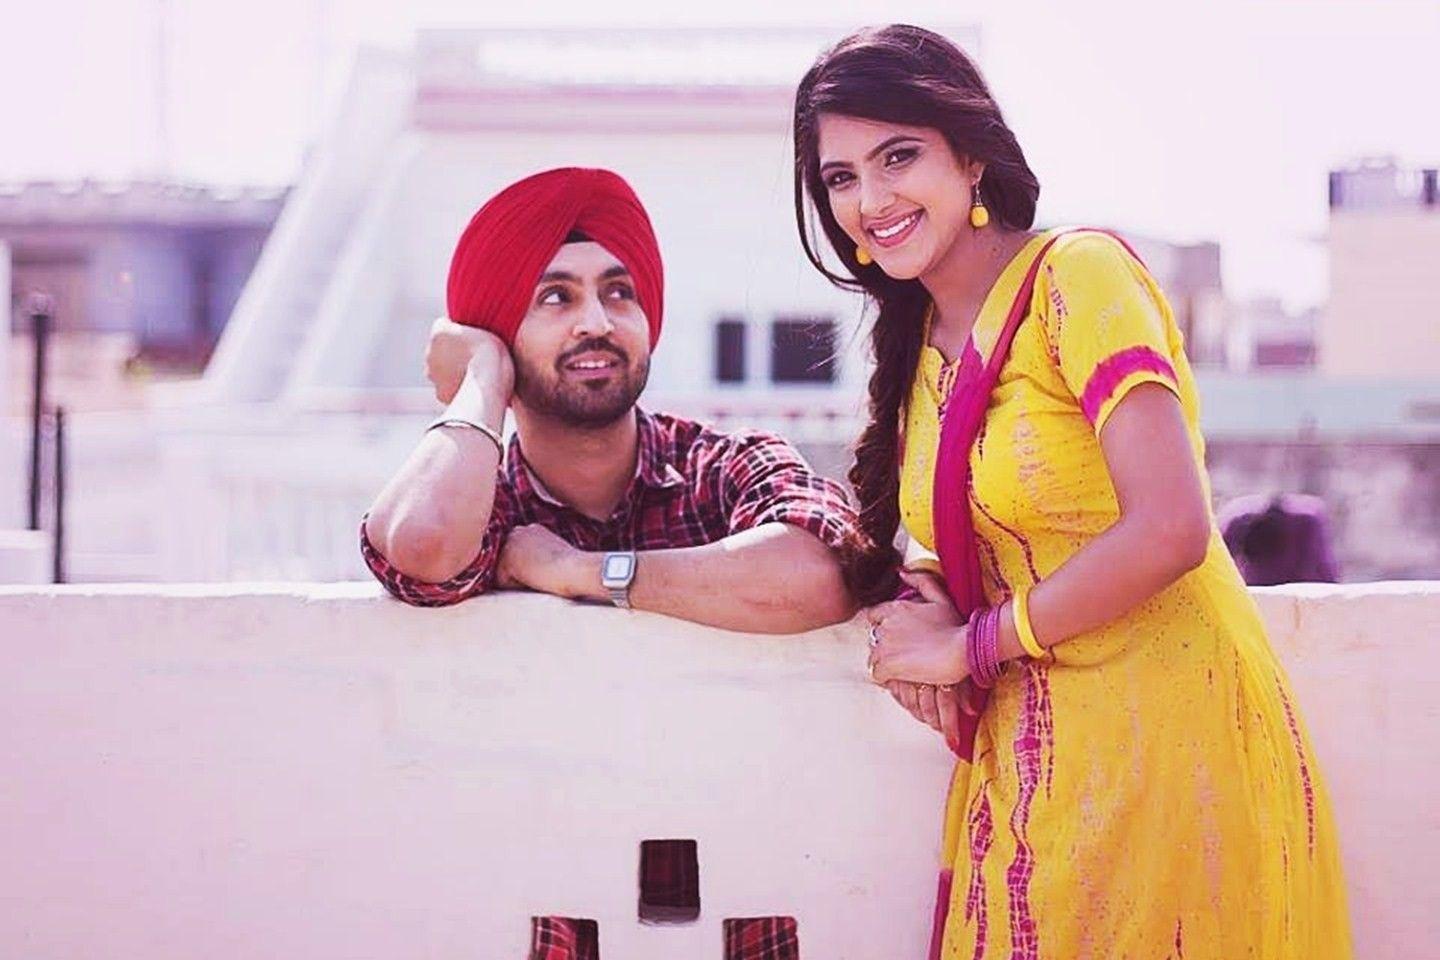 Punjabi Couple Sikh Boy And Girl .baltana.com